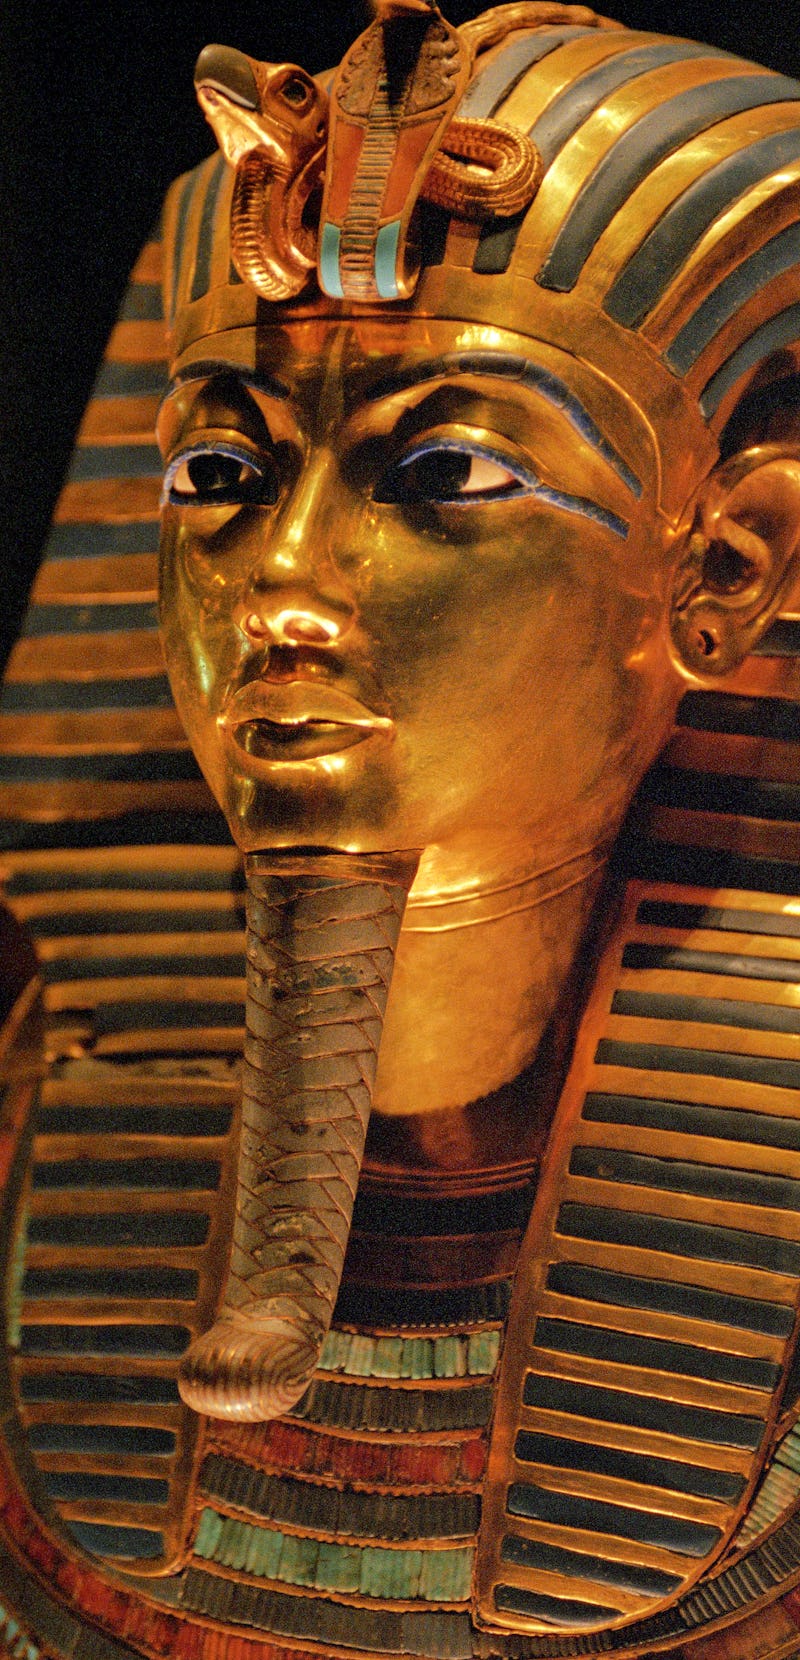 CAIRO, EGYPT - NOVEMBER 15 : Mask of Tutankhamun's mummy at the Museum of Egyptian Antiquities in Ca...